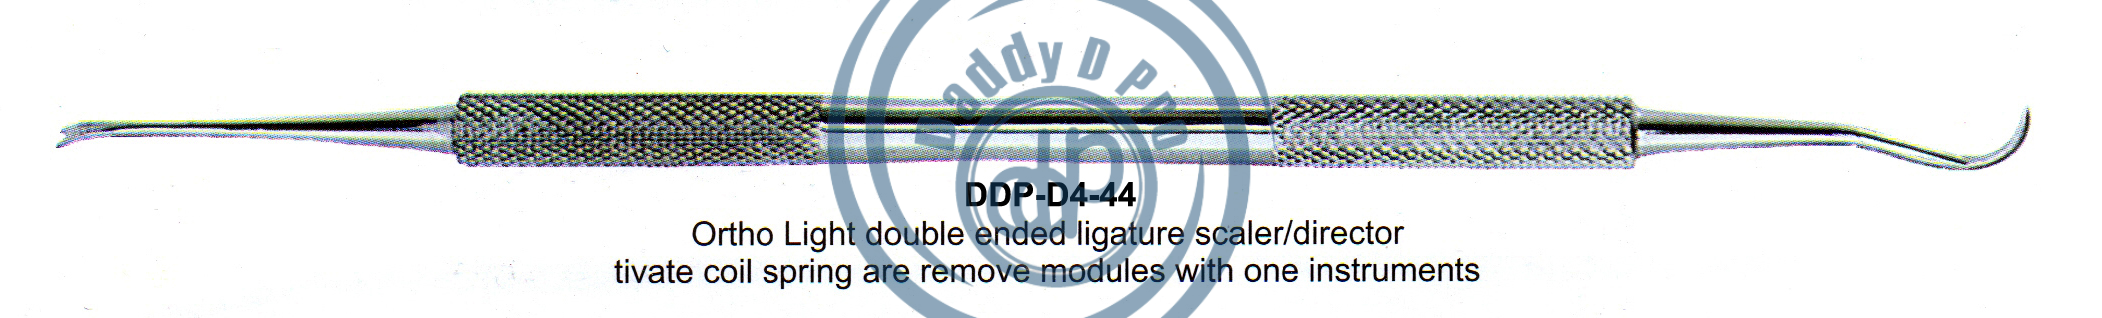 images/DDP-D4-44.png